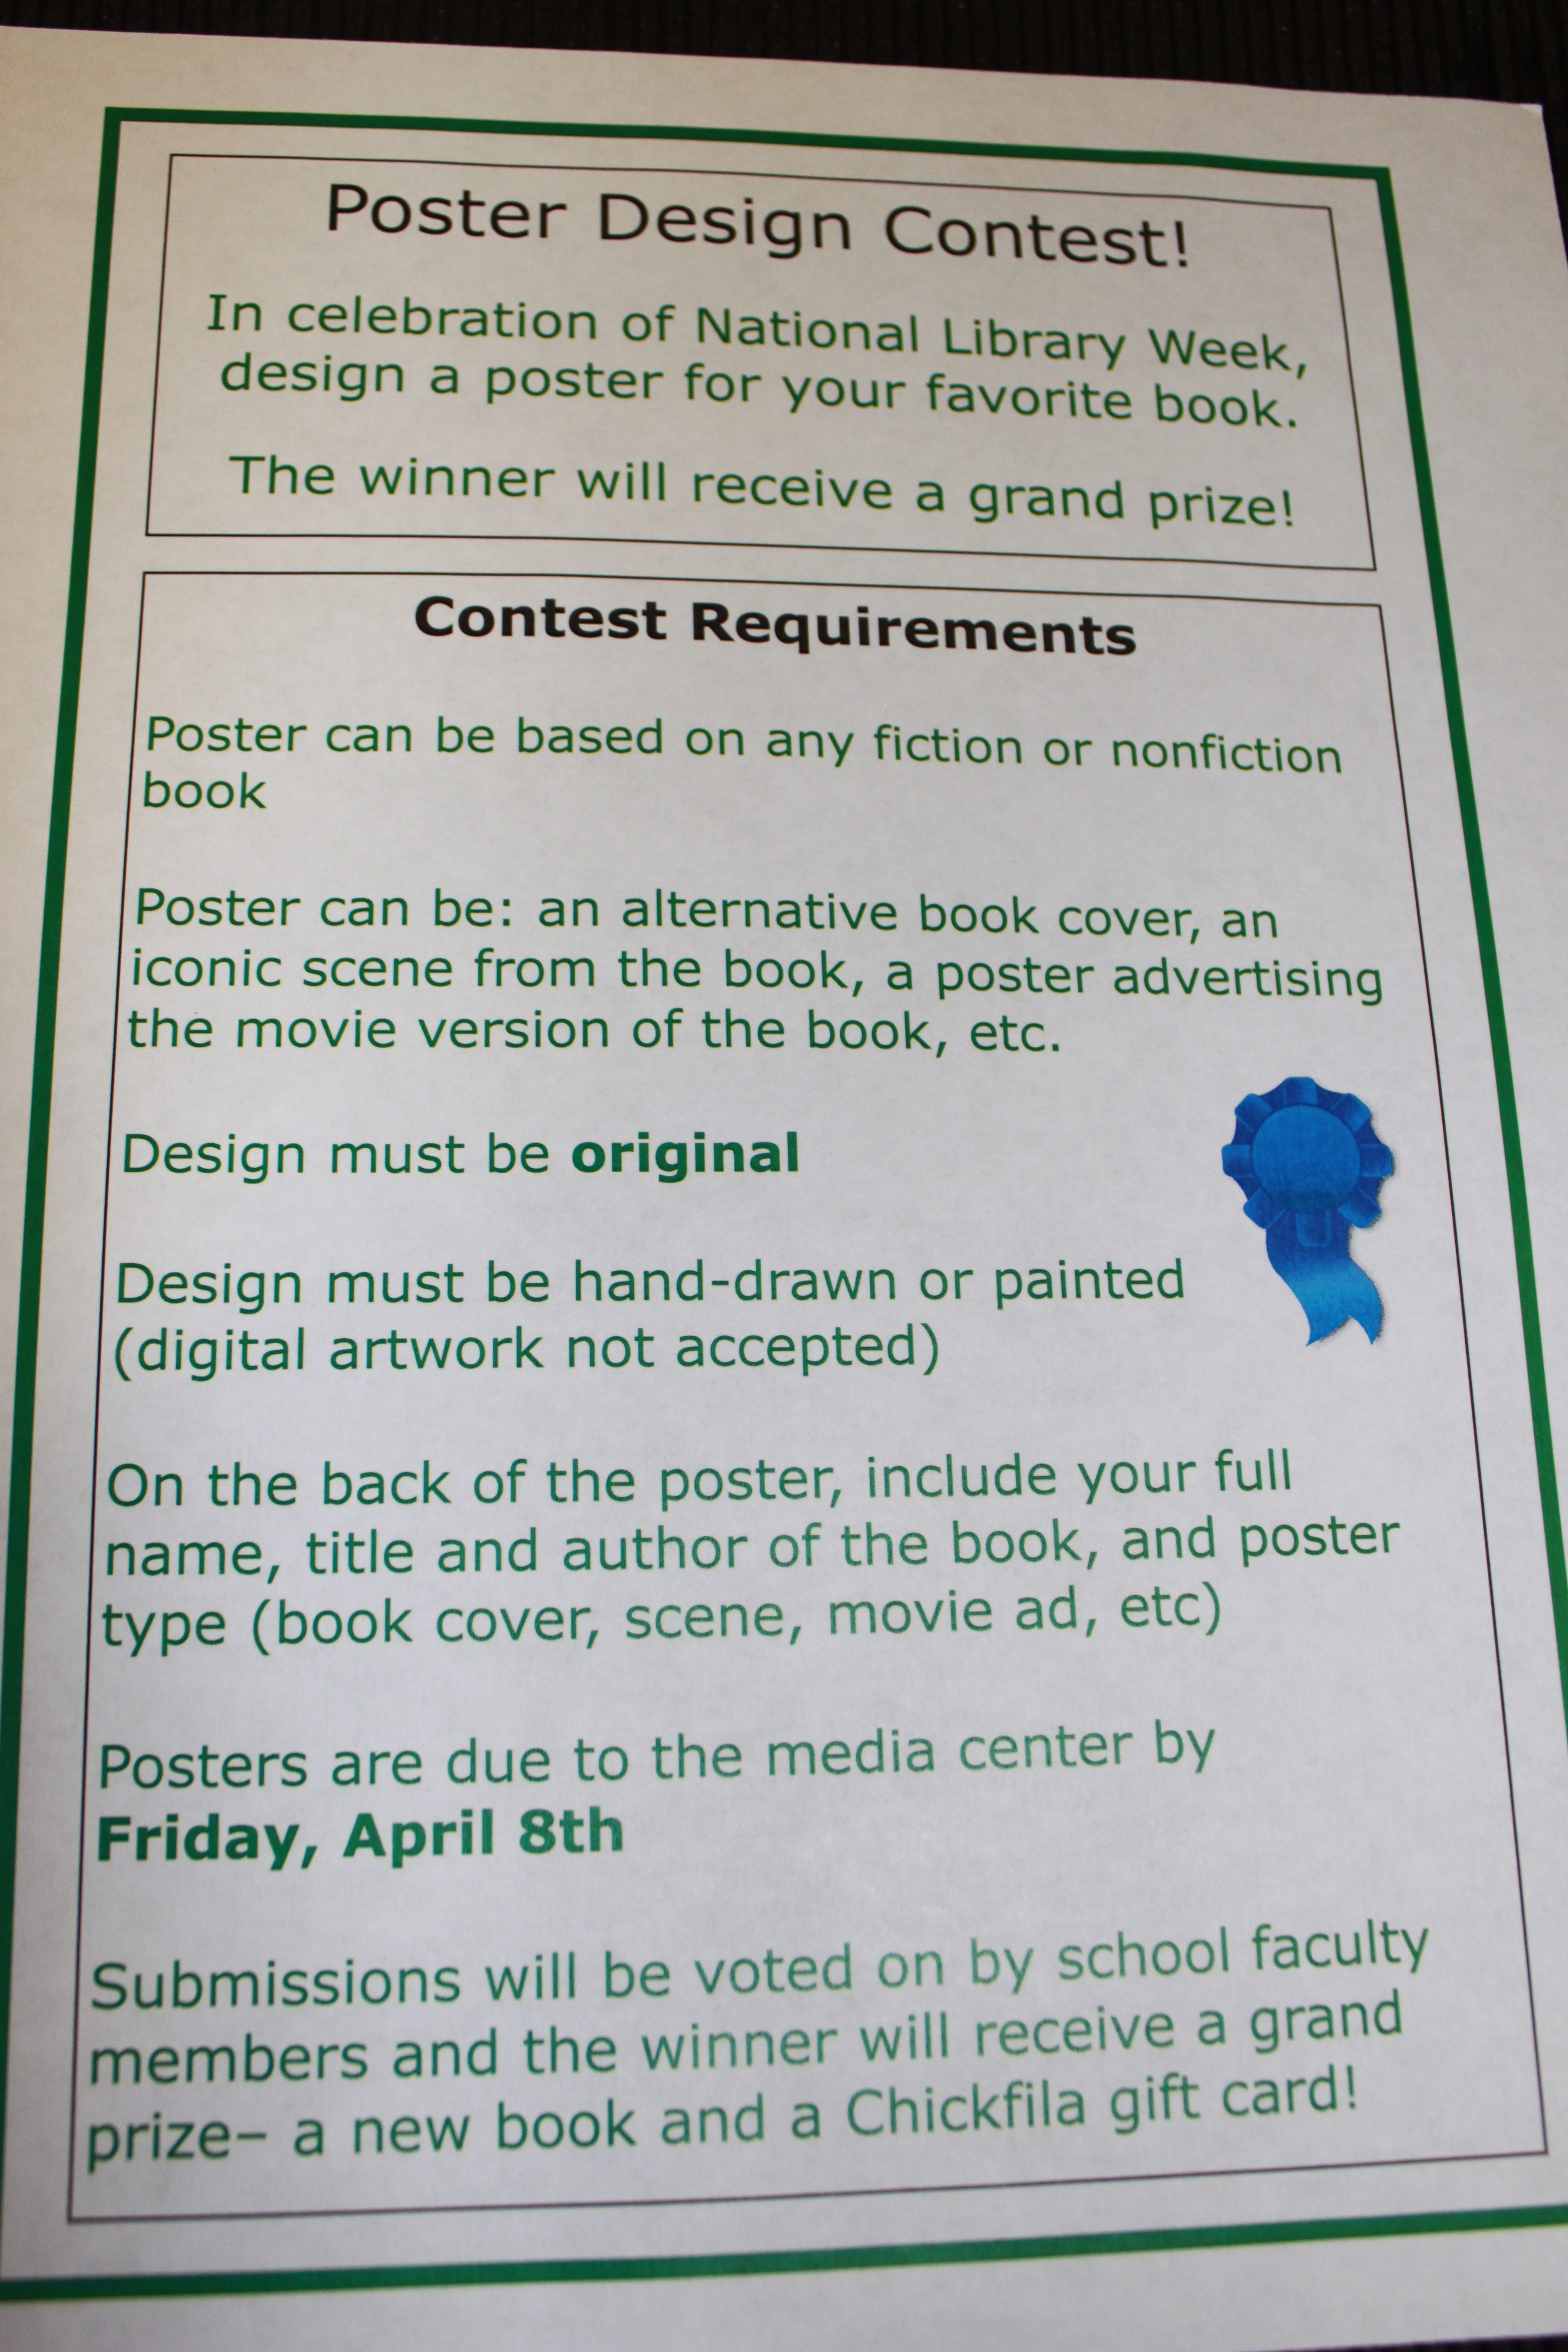 Media center holds poster contest